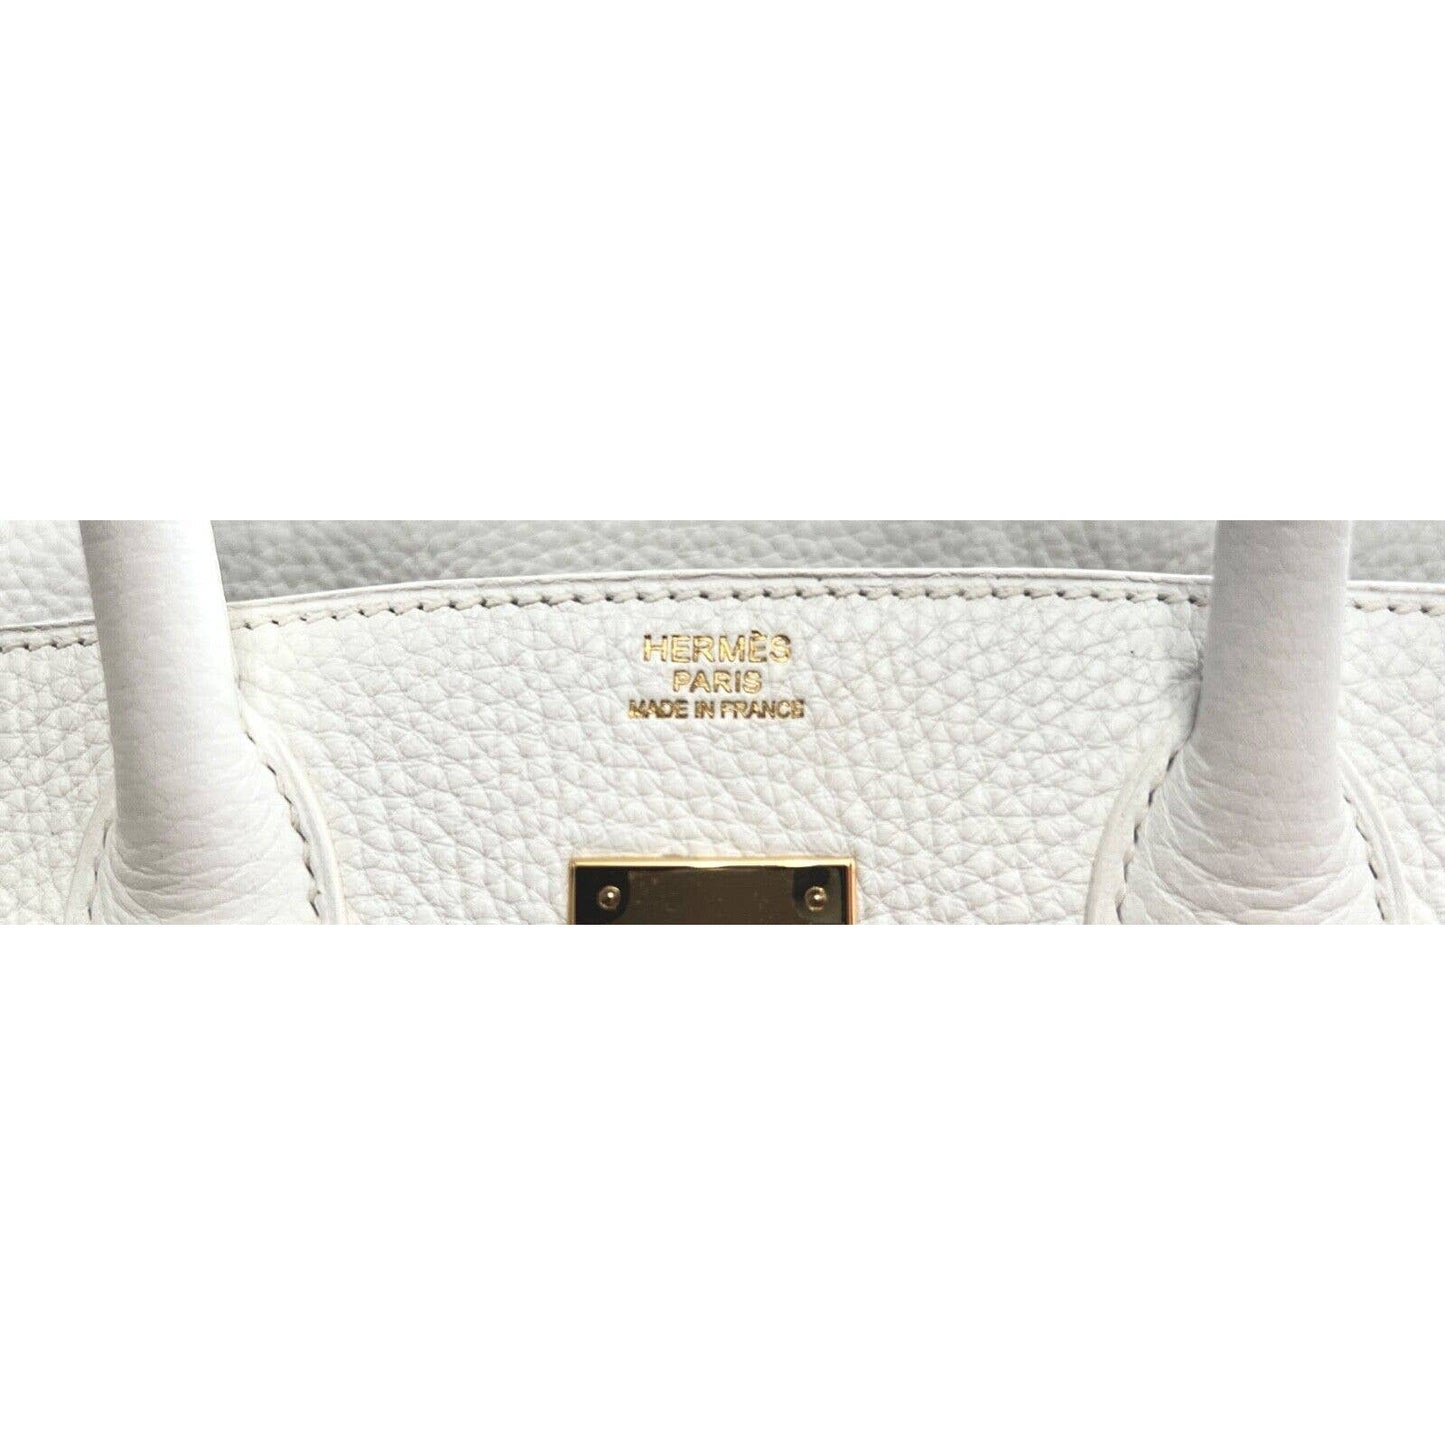 Hermes Birkin 30 White Leather Gold Hardware Bag Handbag